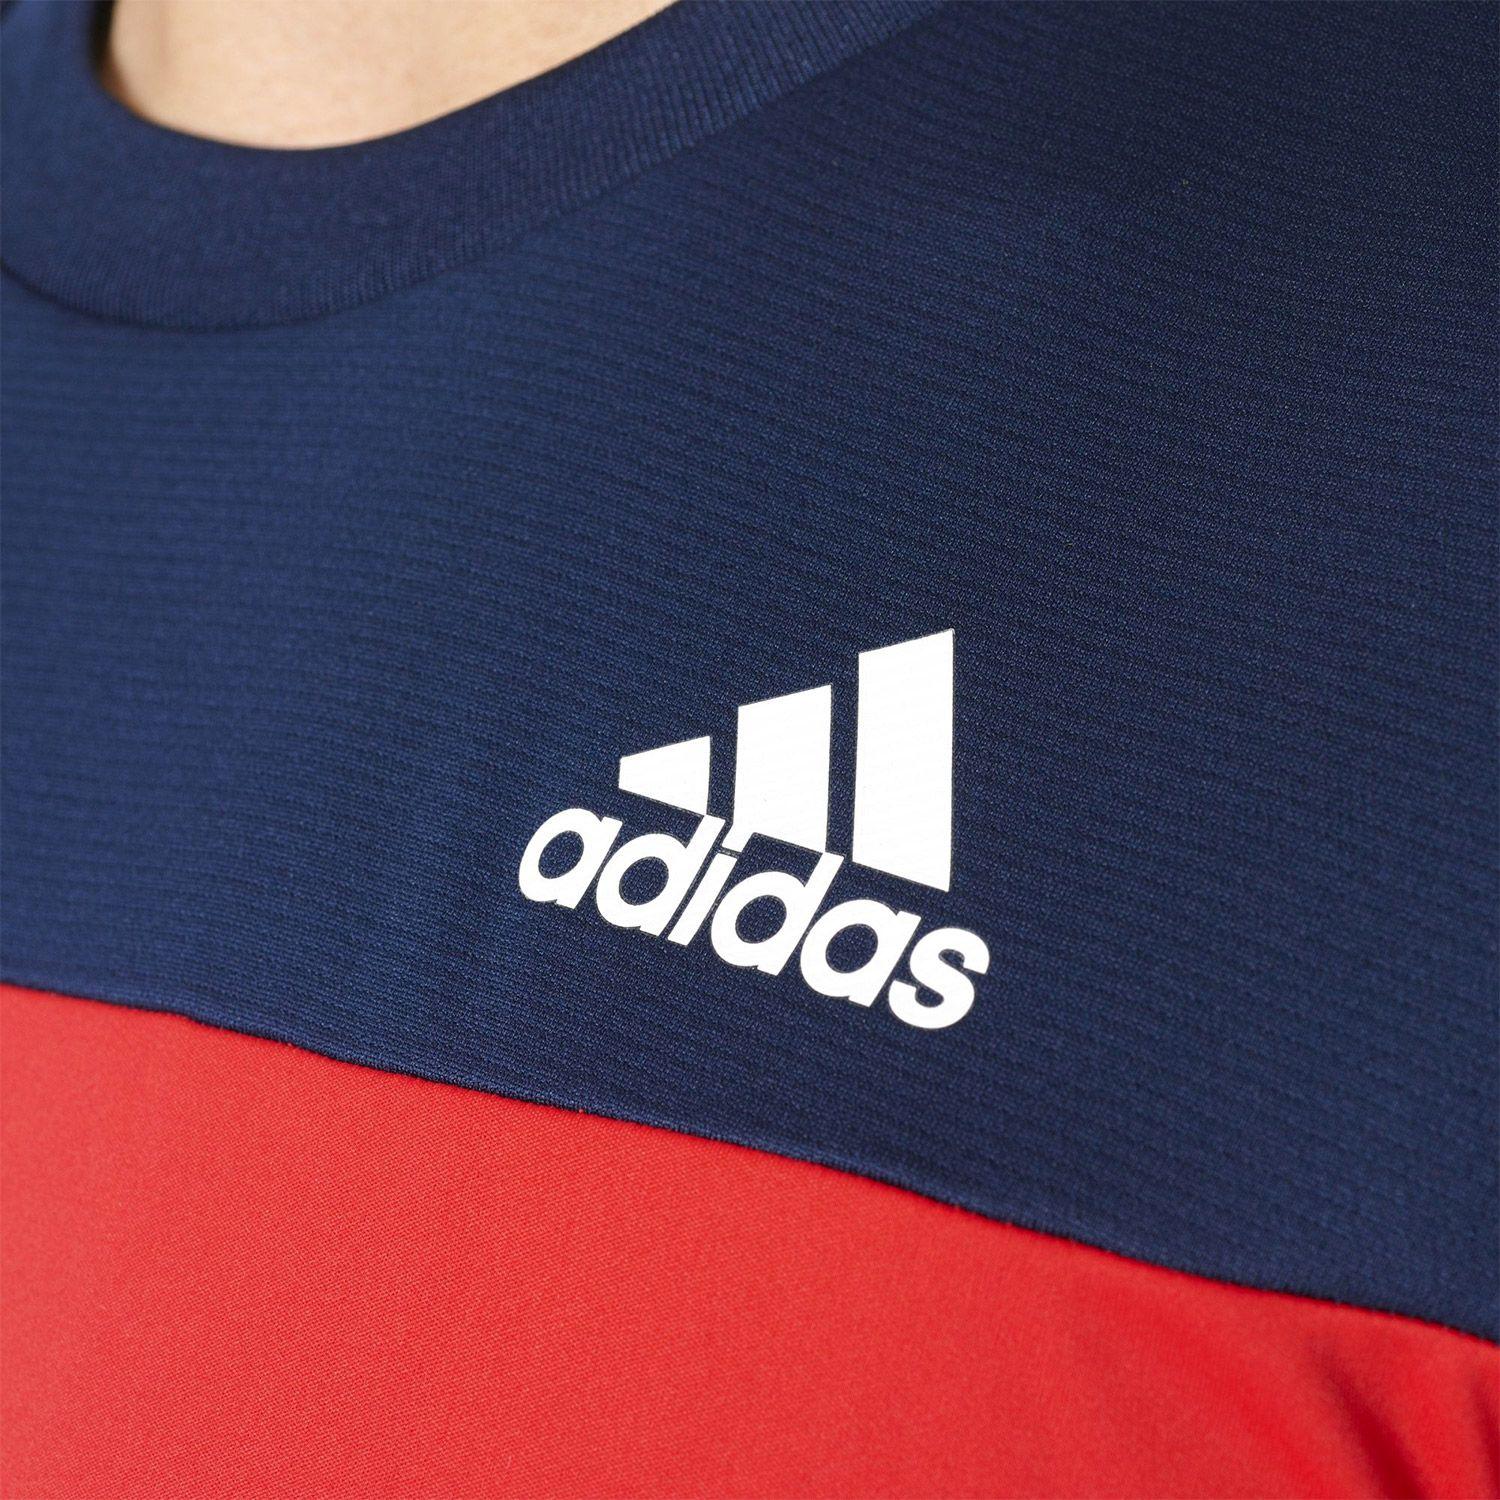 Blue and Red Adidas Logo - Adidas Club Men's Tennis T Shirt